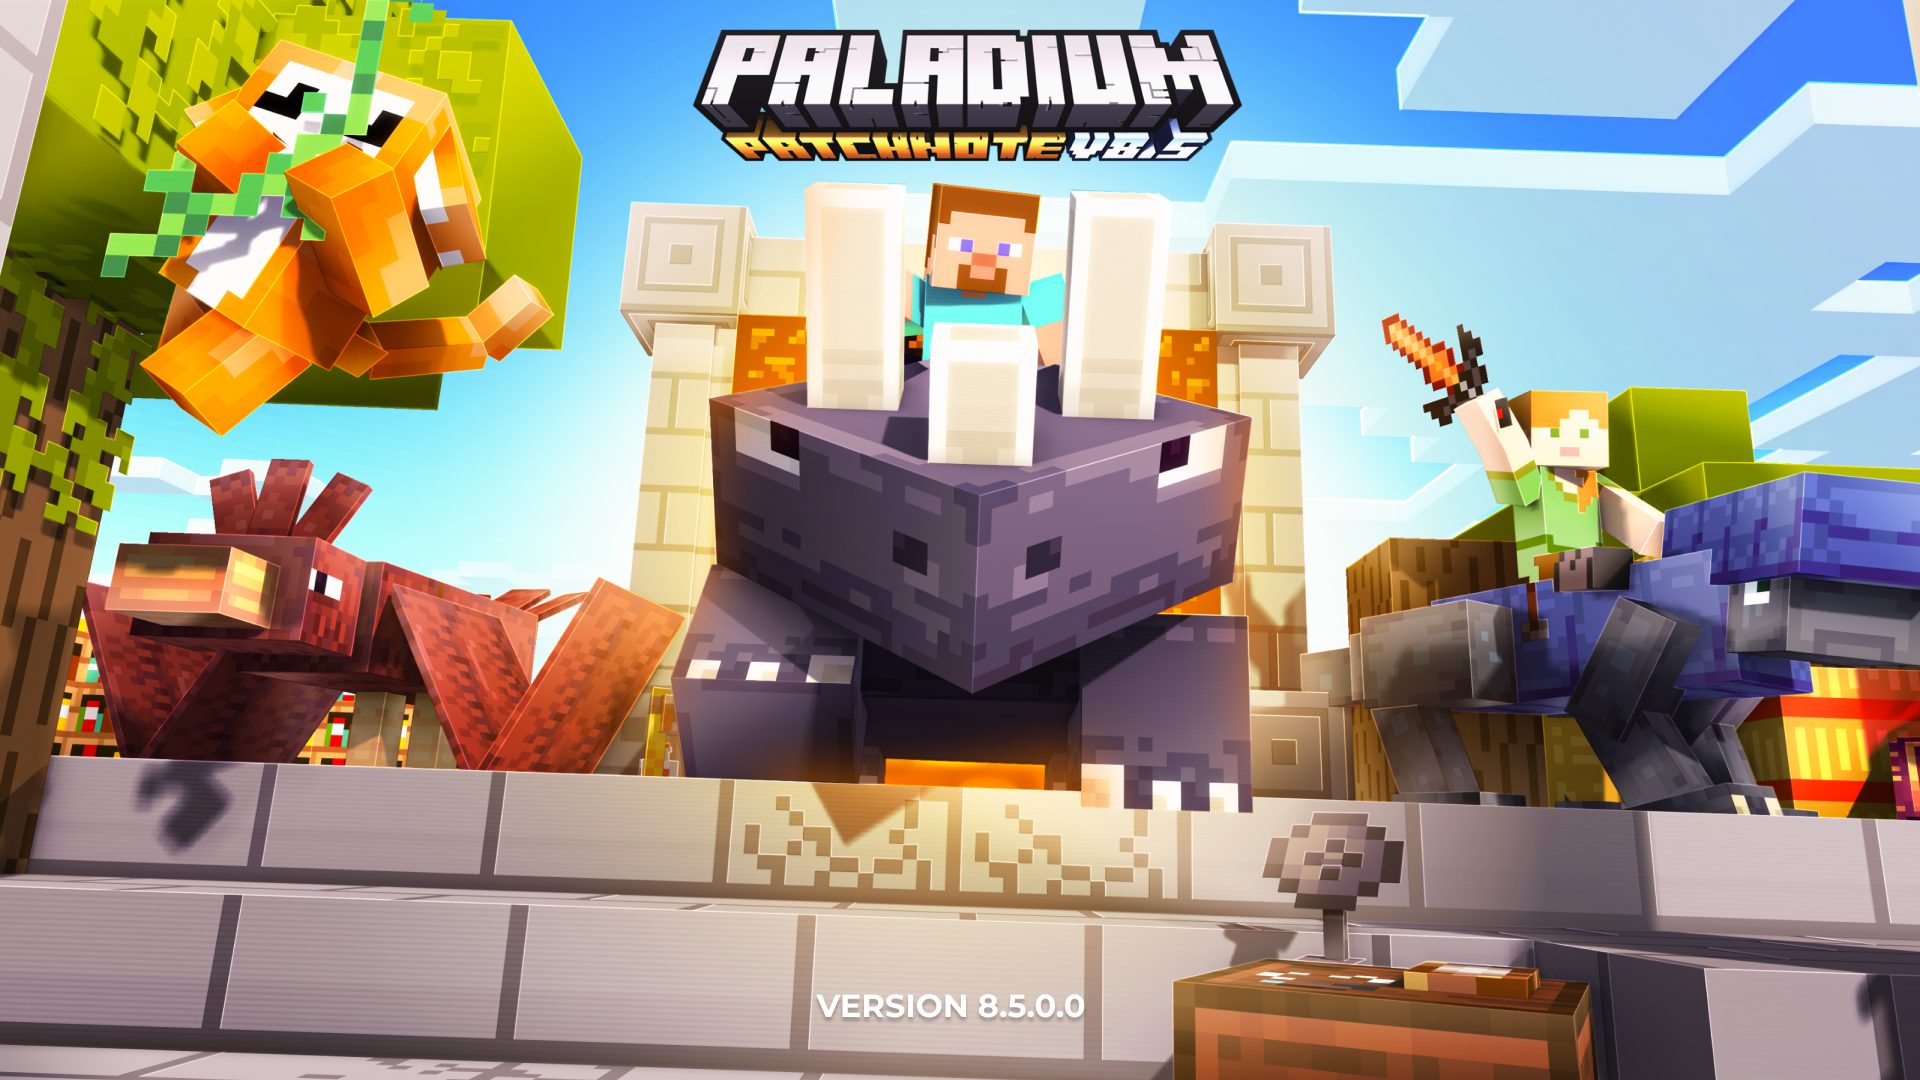 Paladium - PatchNote V8.5.0.0 | 03/02/2022